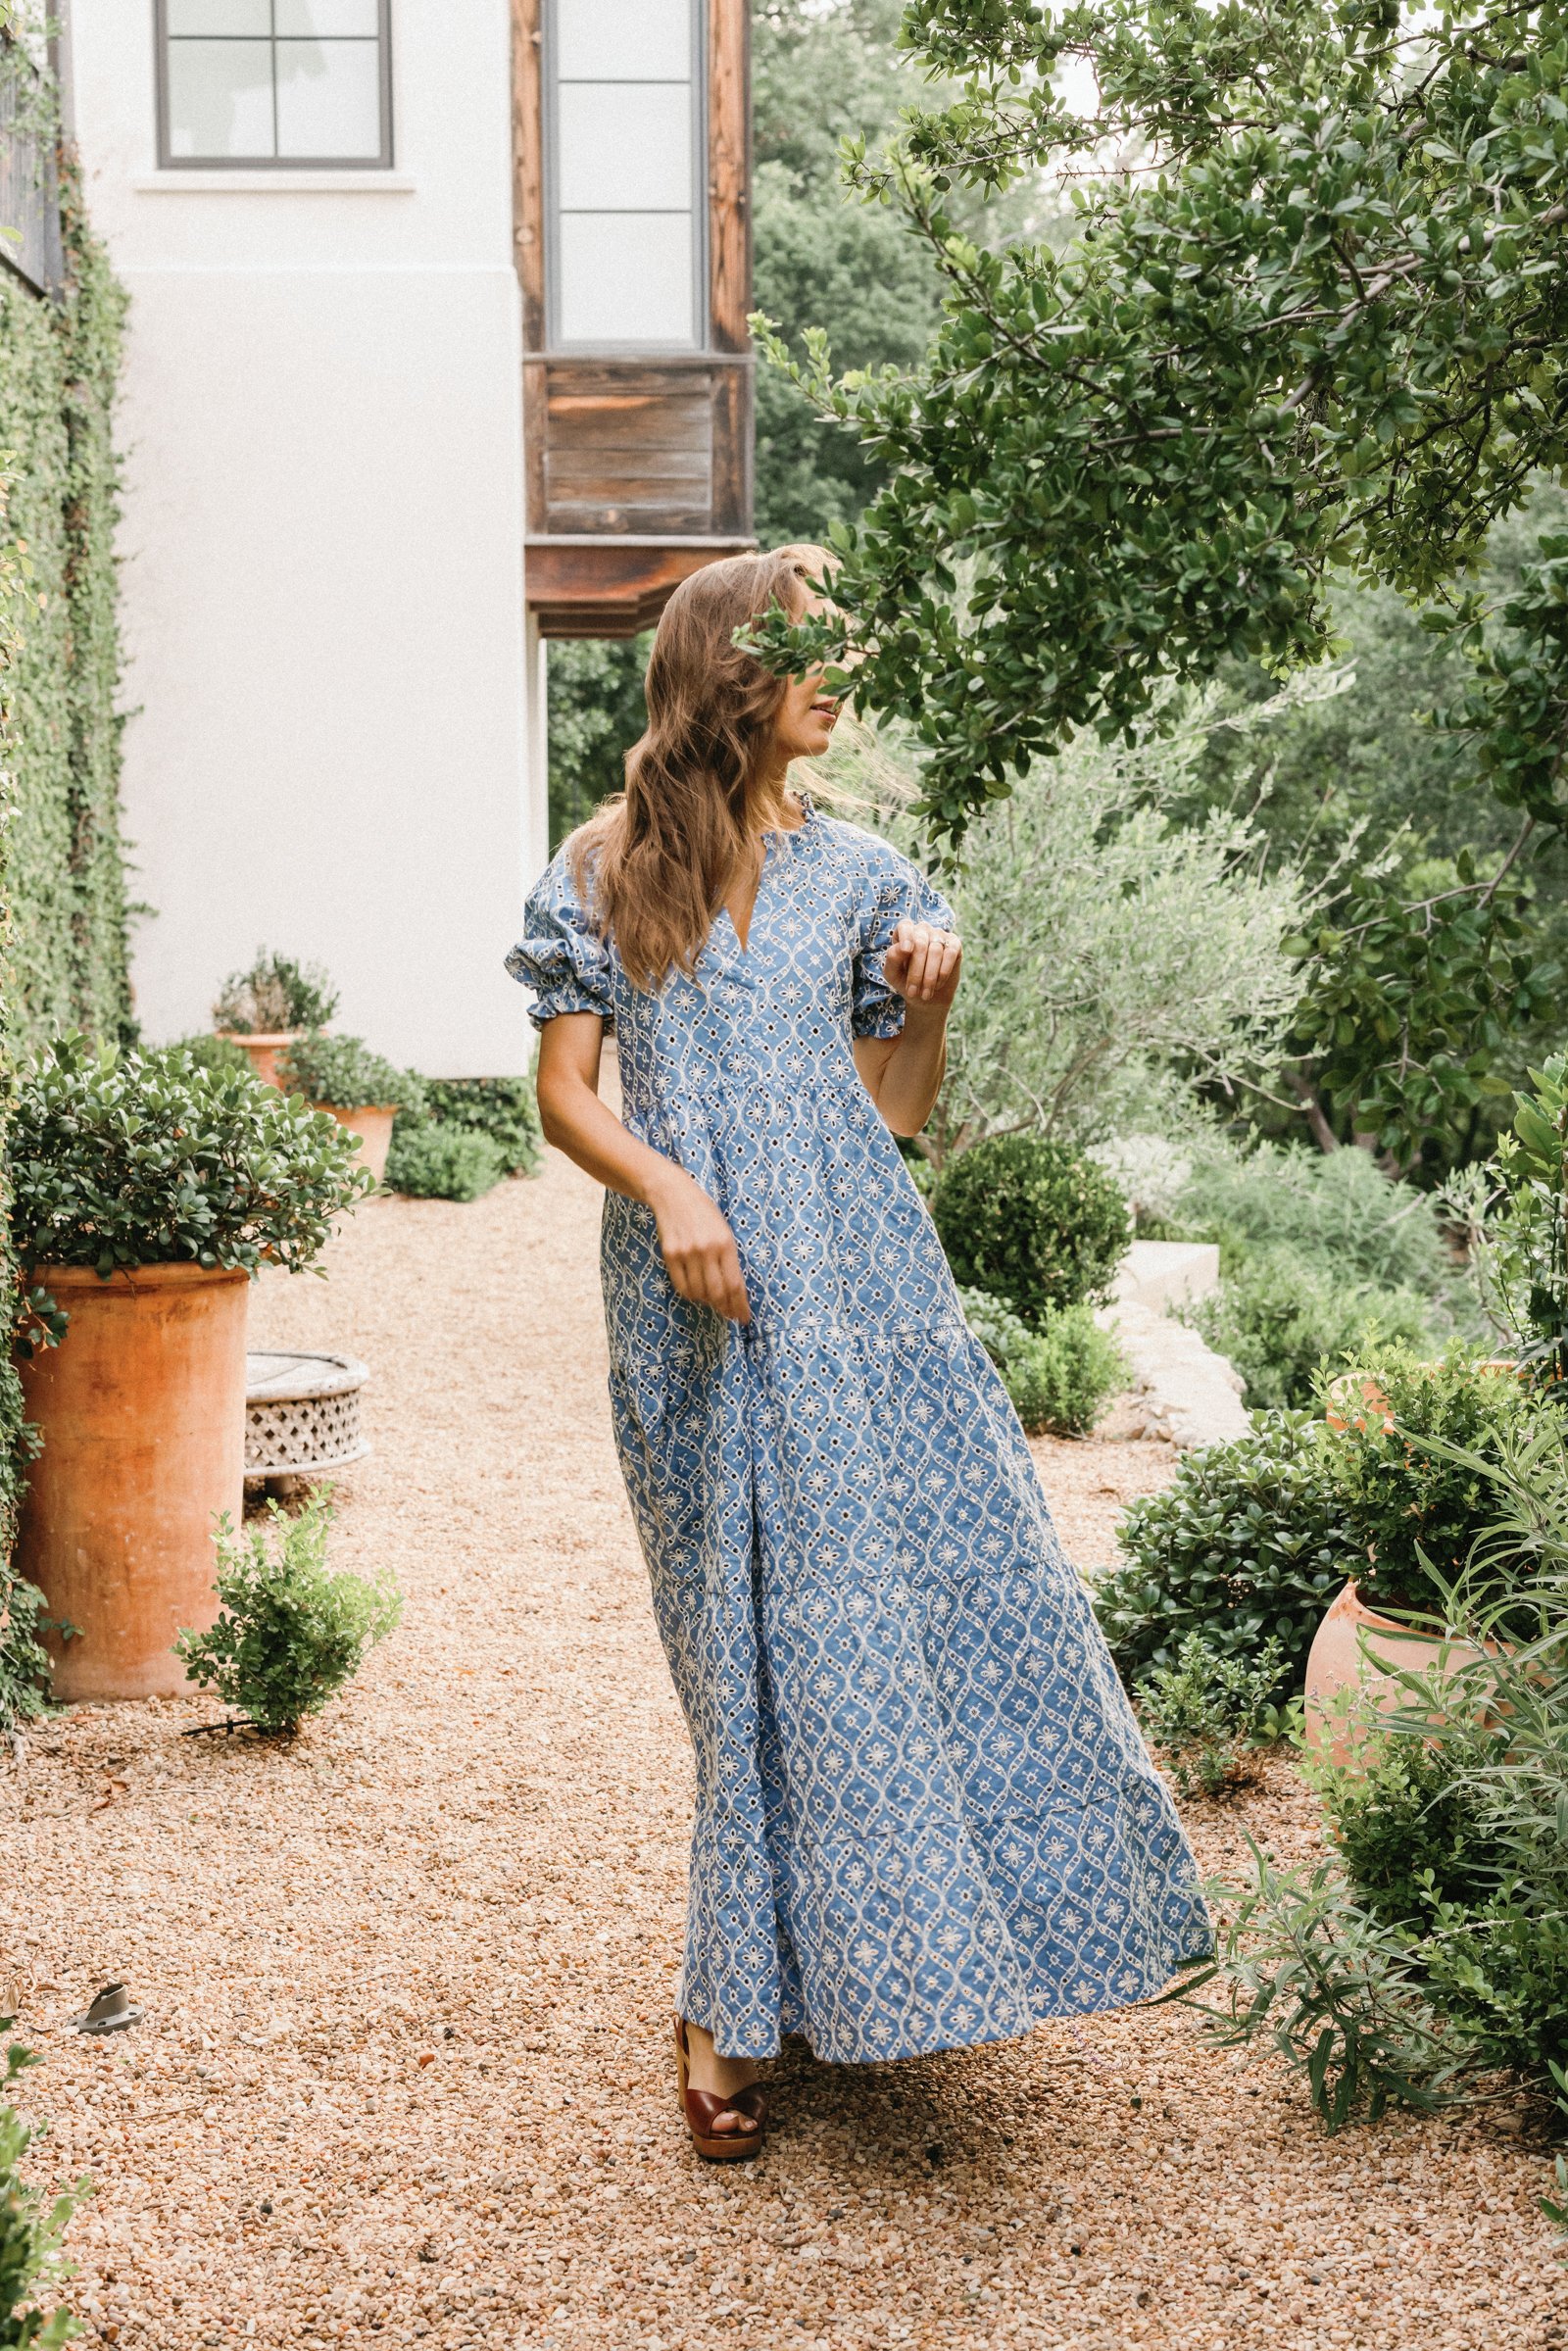 Camille In A Blue Sezane Maxi Dress In The Backyard